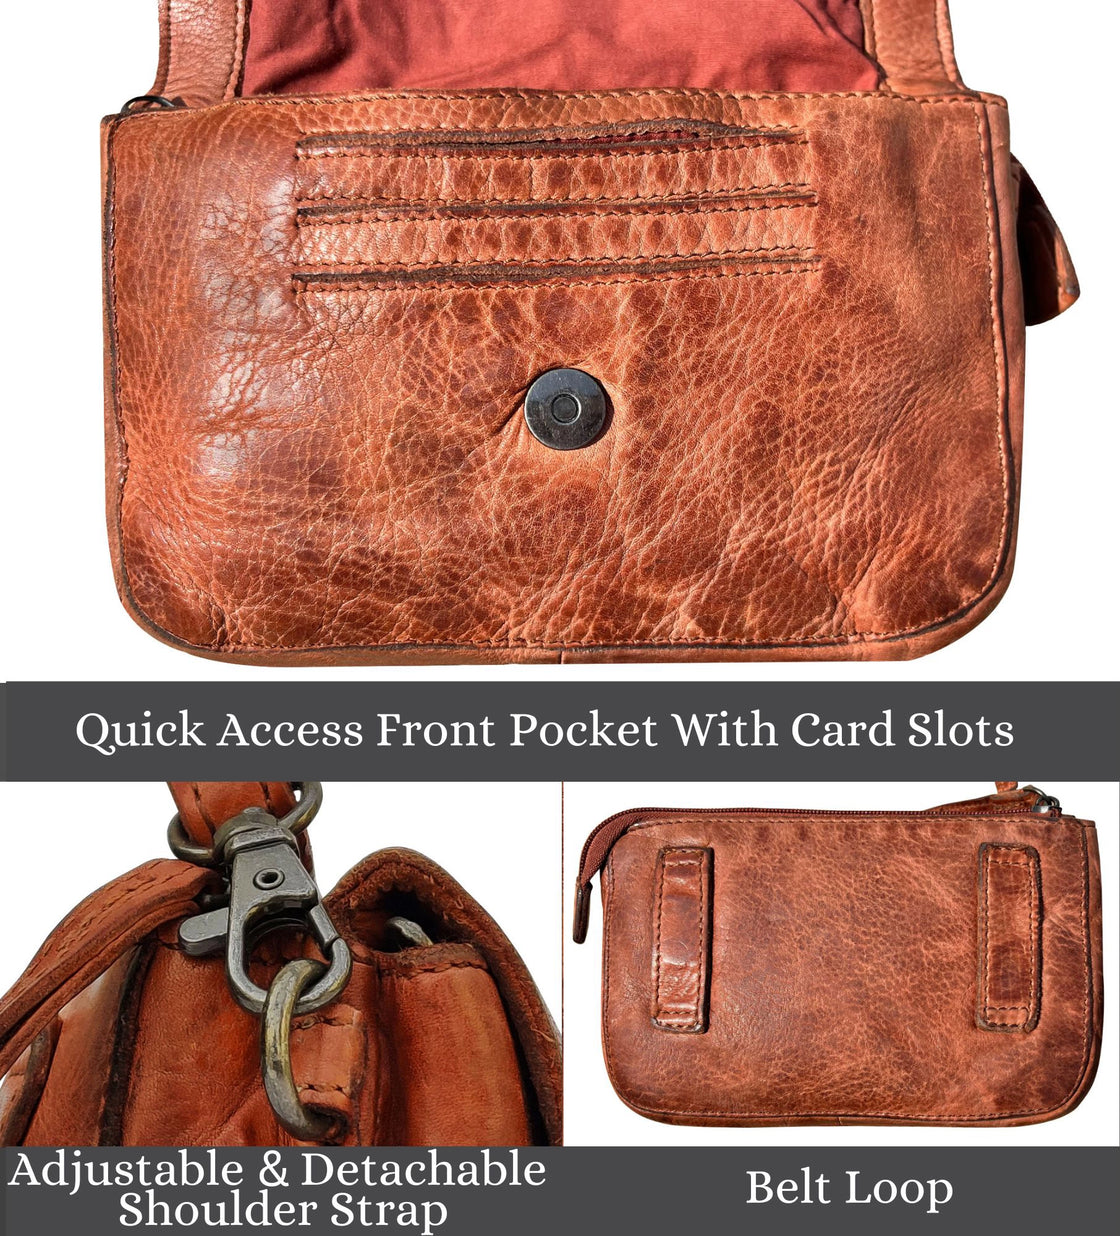 All Things Belt Bags | Street style bags, Belt bag fashion, Gucci belt bag